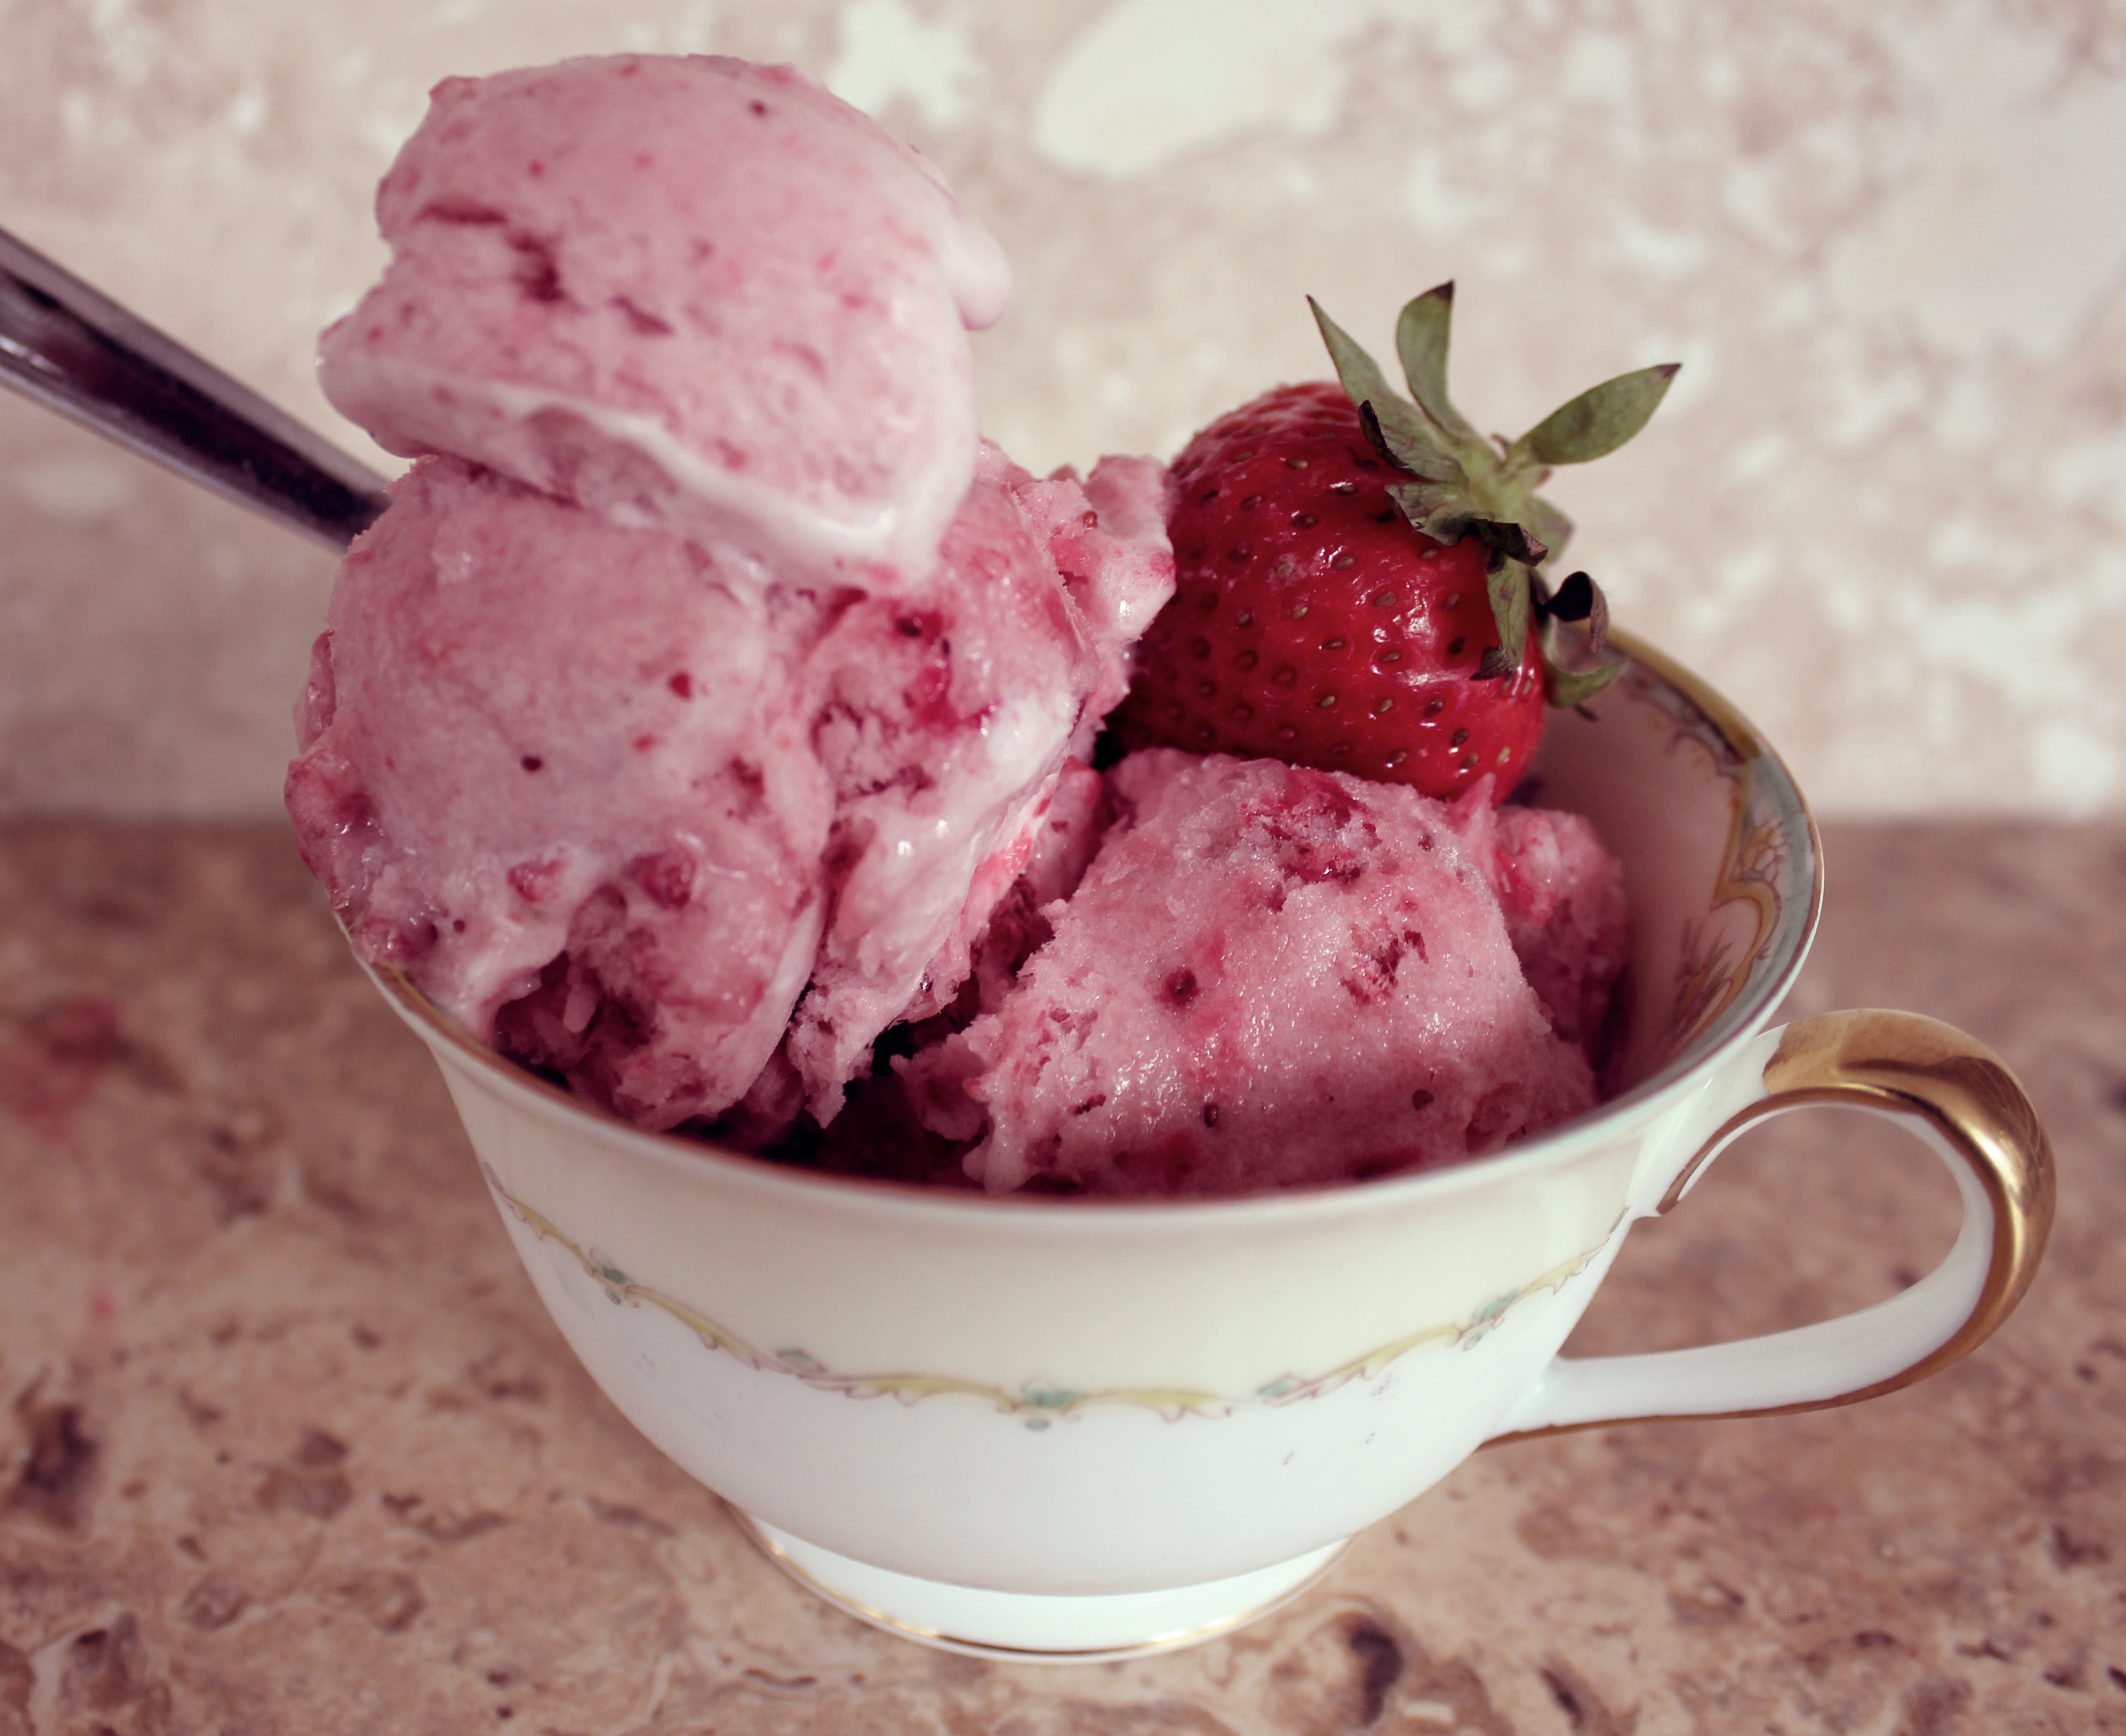 Strawberry cloud vegan ice cream with aquafaba believeinvegan.com